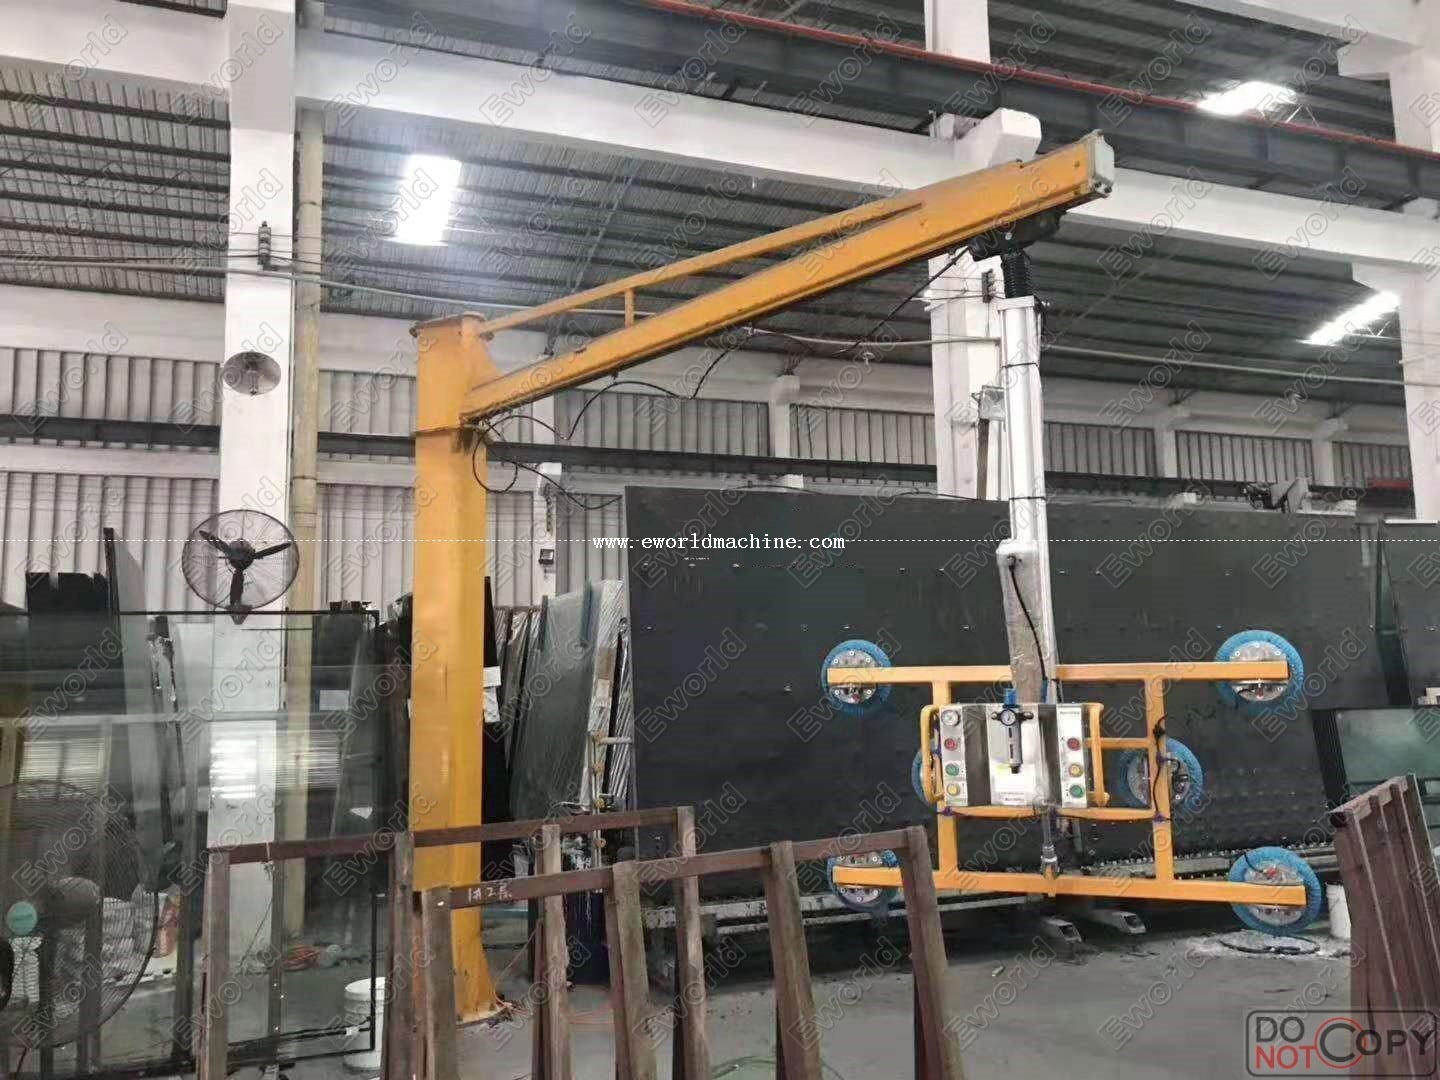 Penumatic Lifting Glass Loading Unloading Equipment Lifter